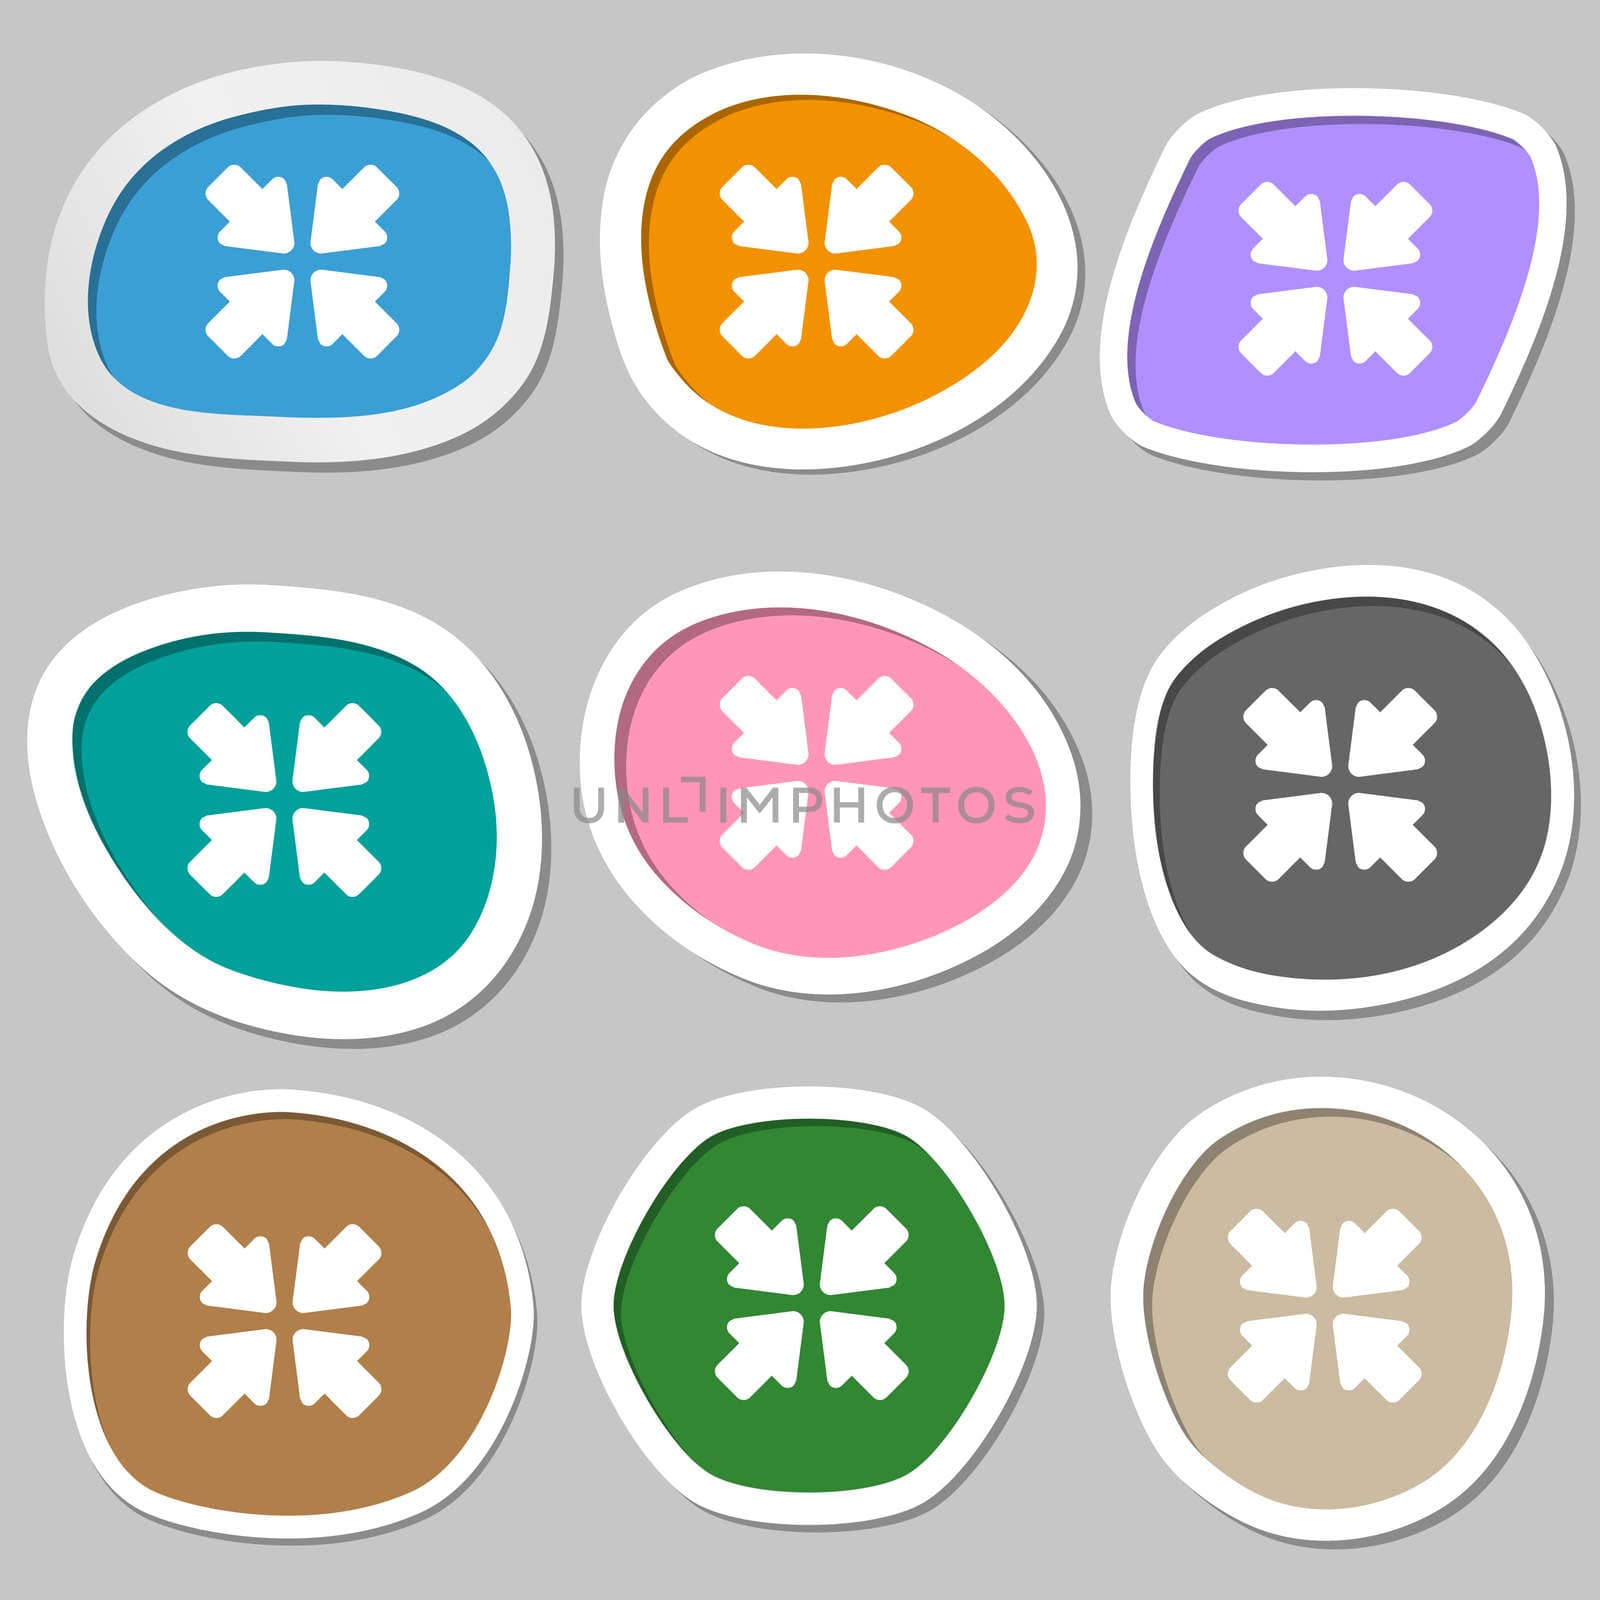 turn to full screen icon symbols. Multicolored paper stickers. illustration